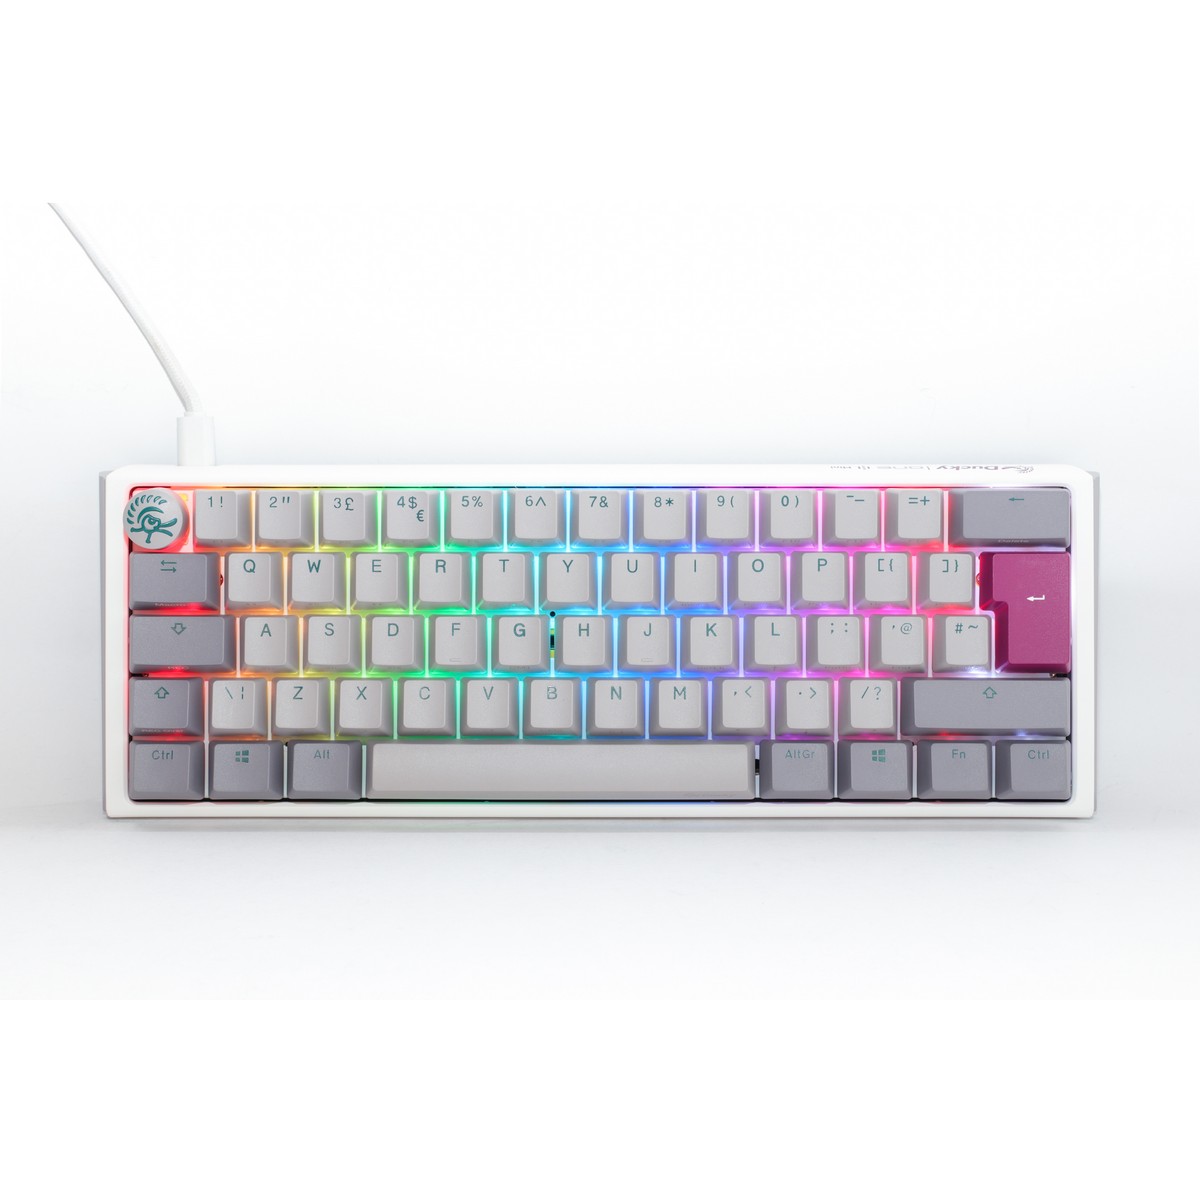 Ducky One 3 Mist Mini 60% USB RGB Mechanical Gaming Keyboard Cherry MX Brown Switch - UK Layout